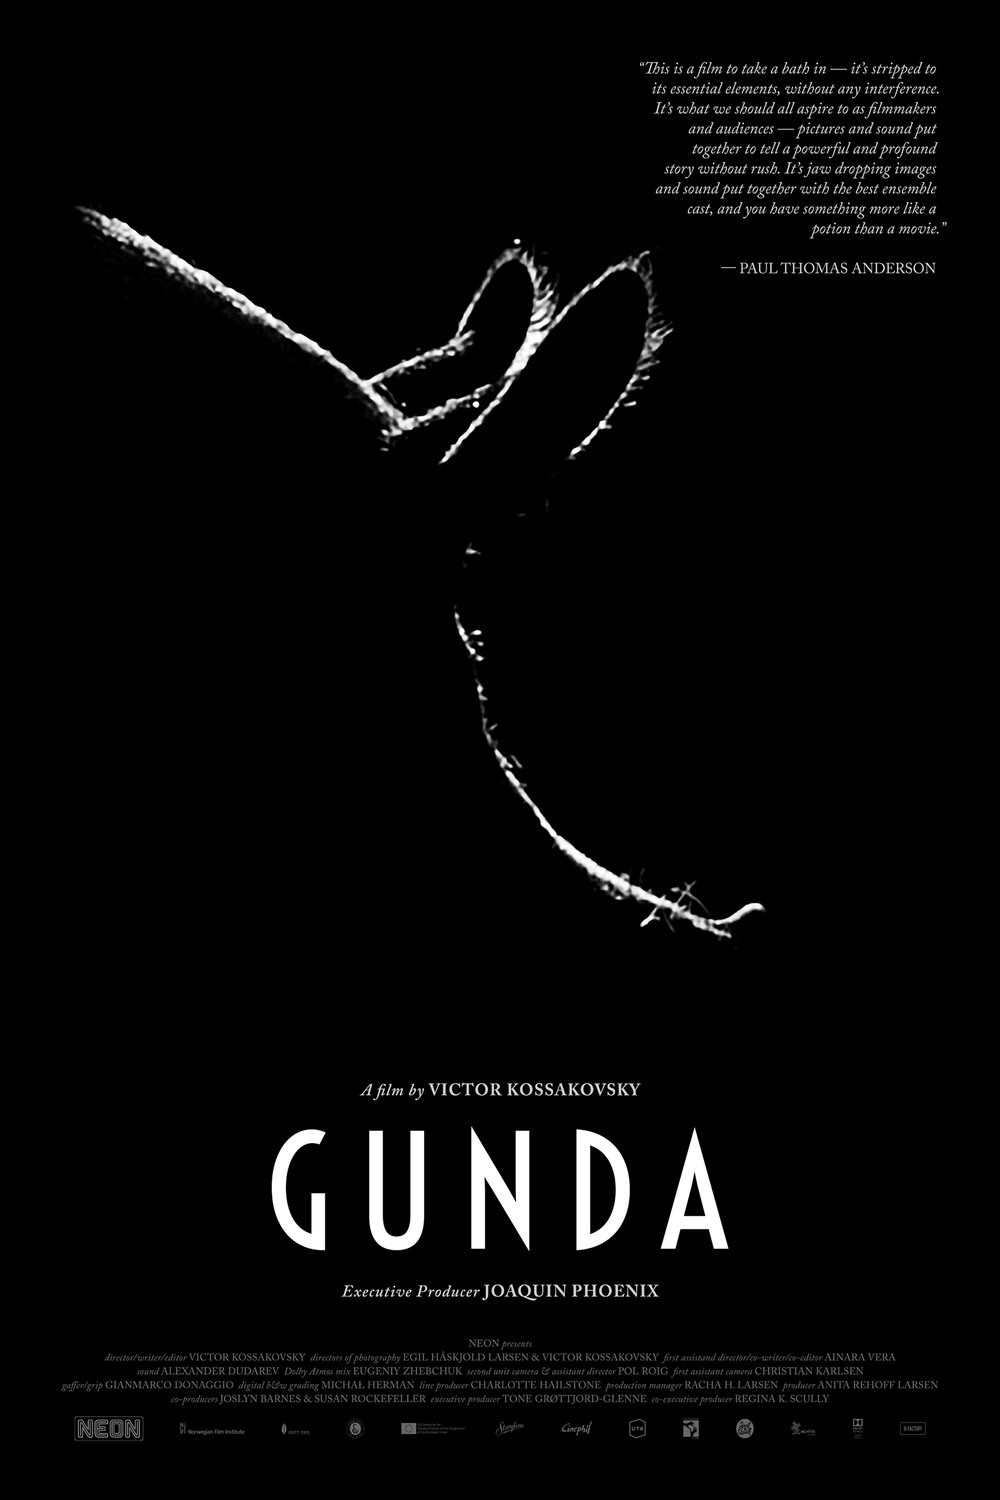 Poster of the movie Gunda